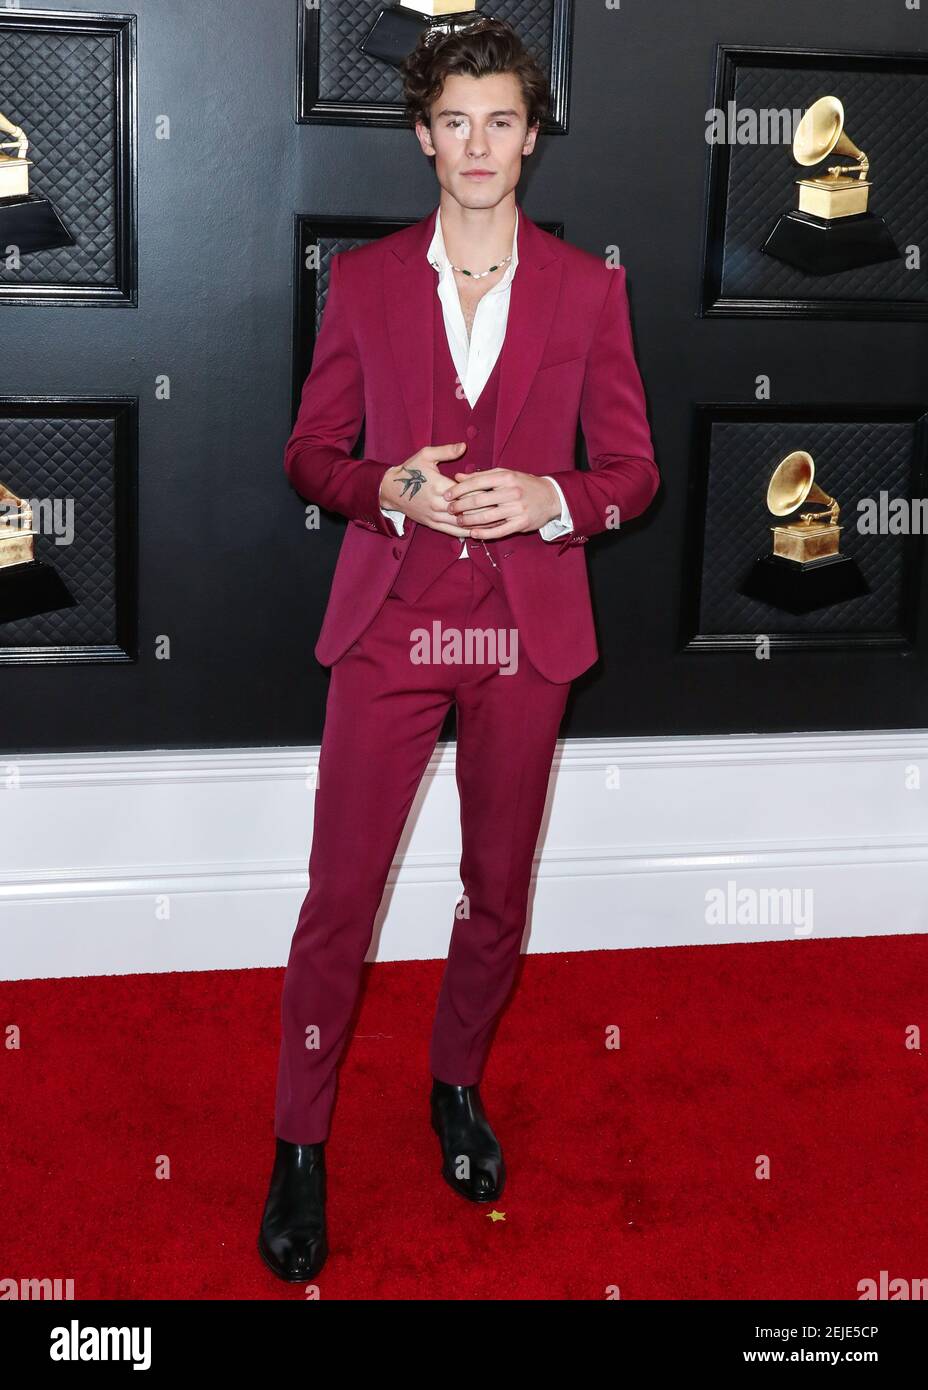 LOS ANGELES, CALIFORNIA, USA - JANUARY 26: Singer Shawn Mendes